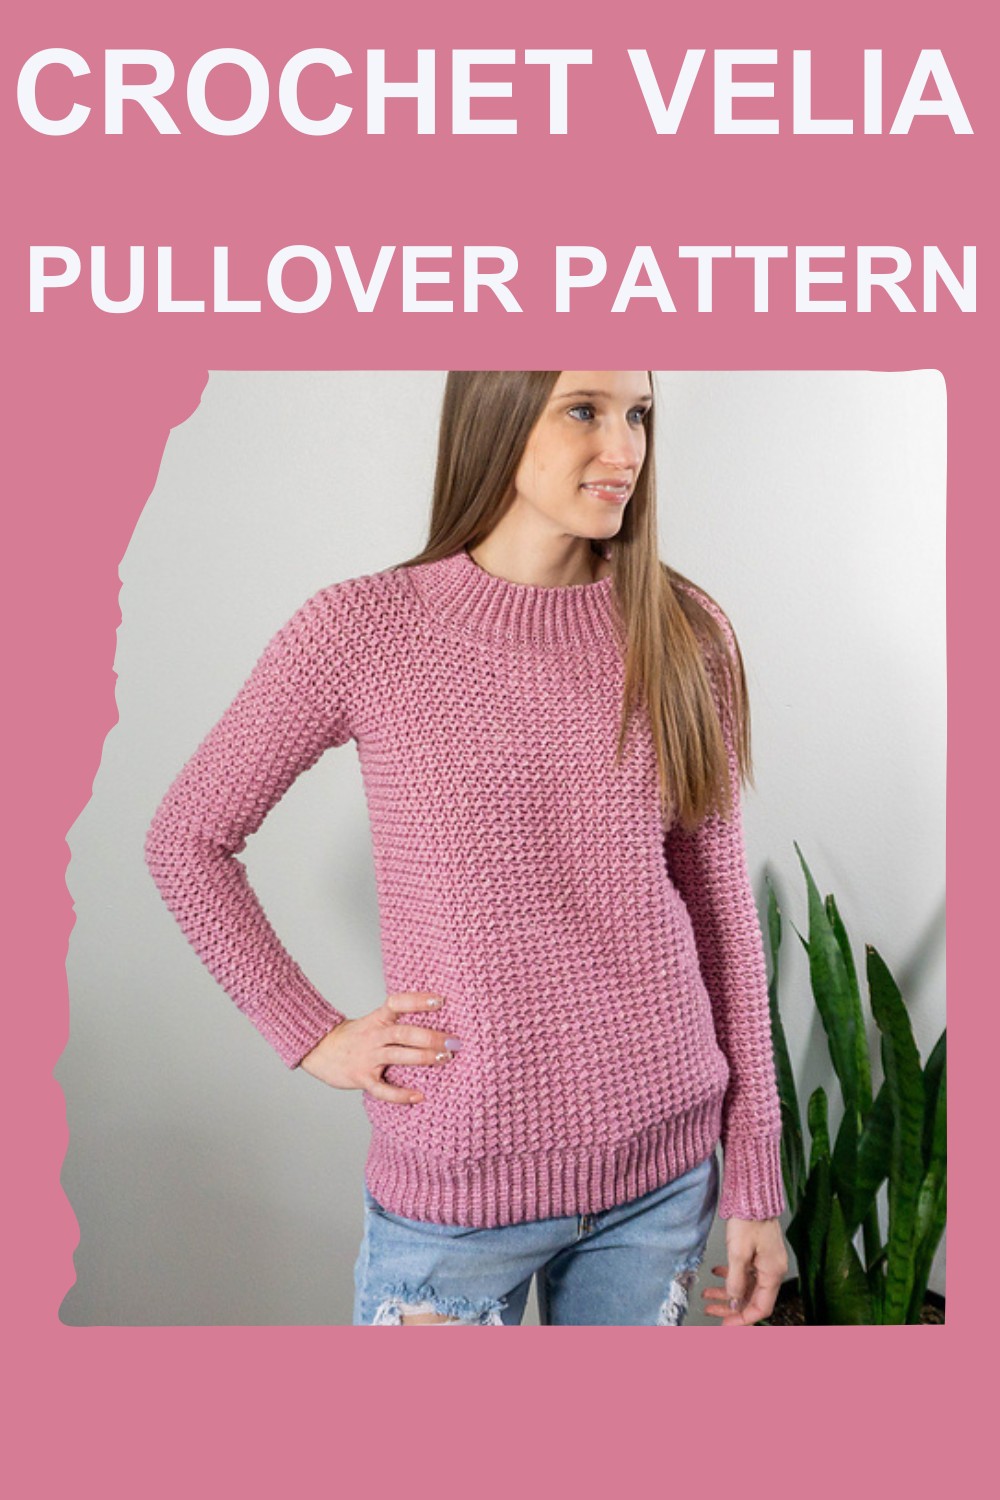 Crochet Velia Pullover Pattern